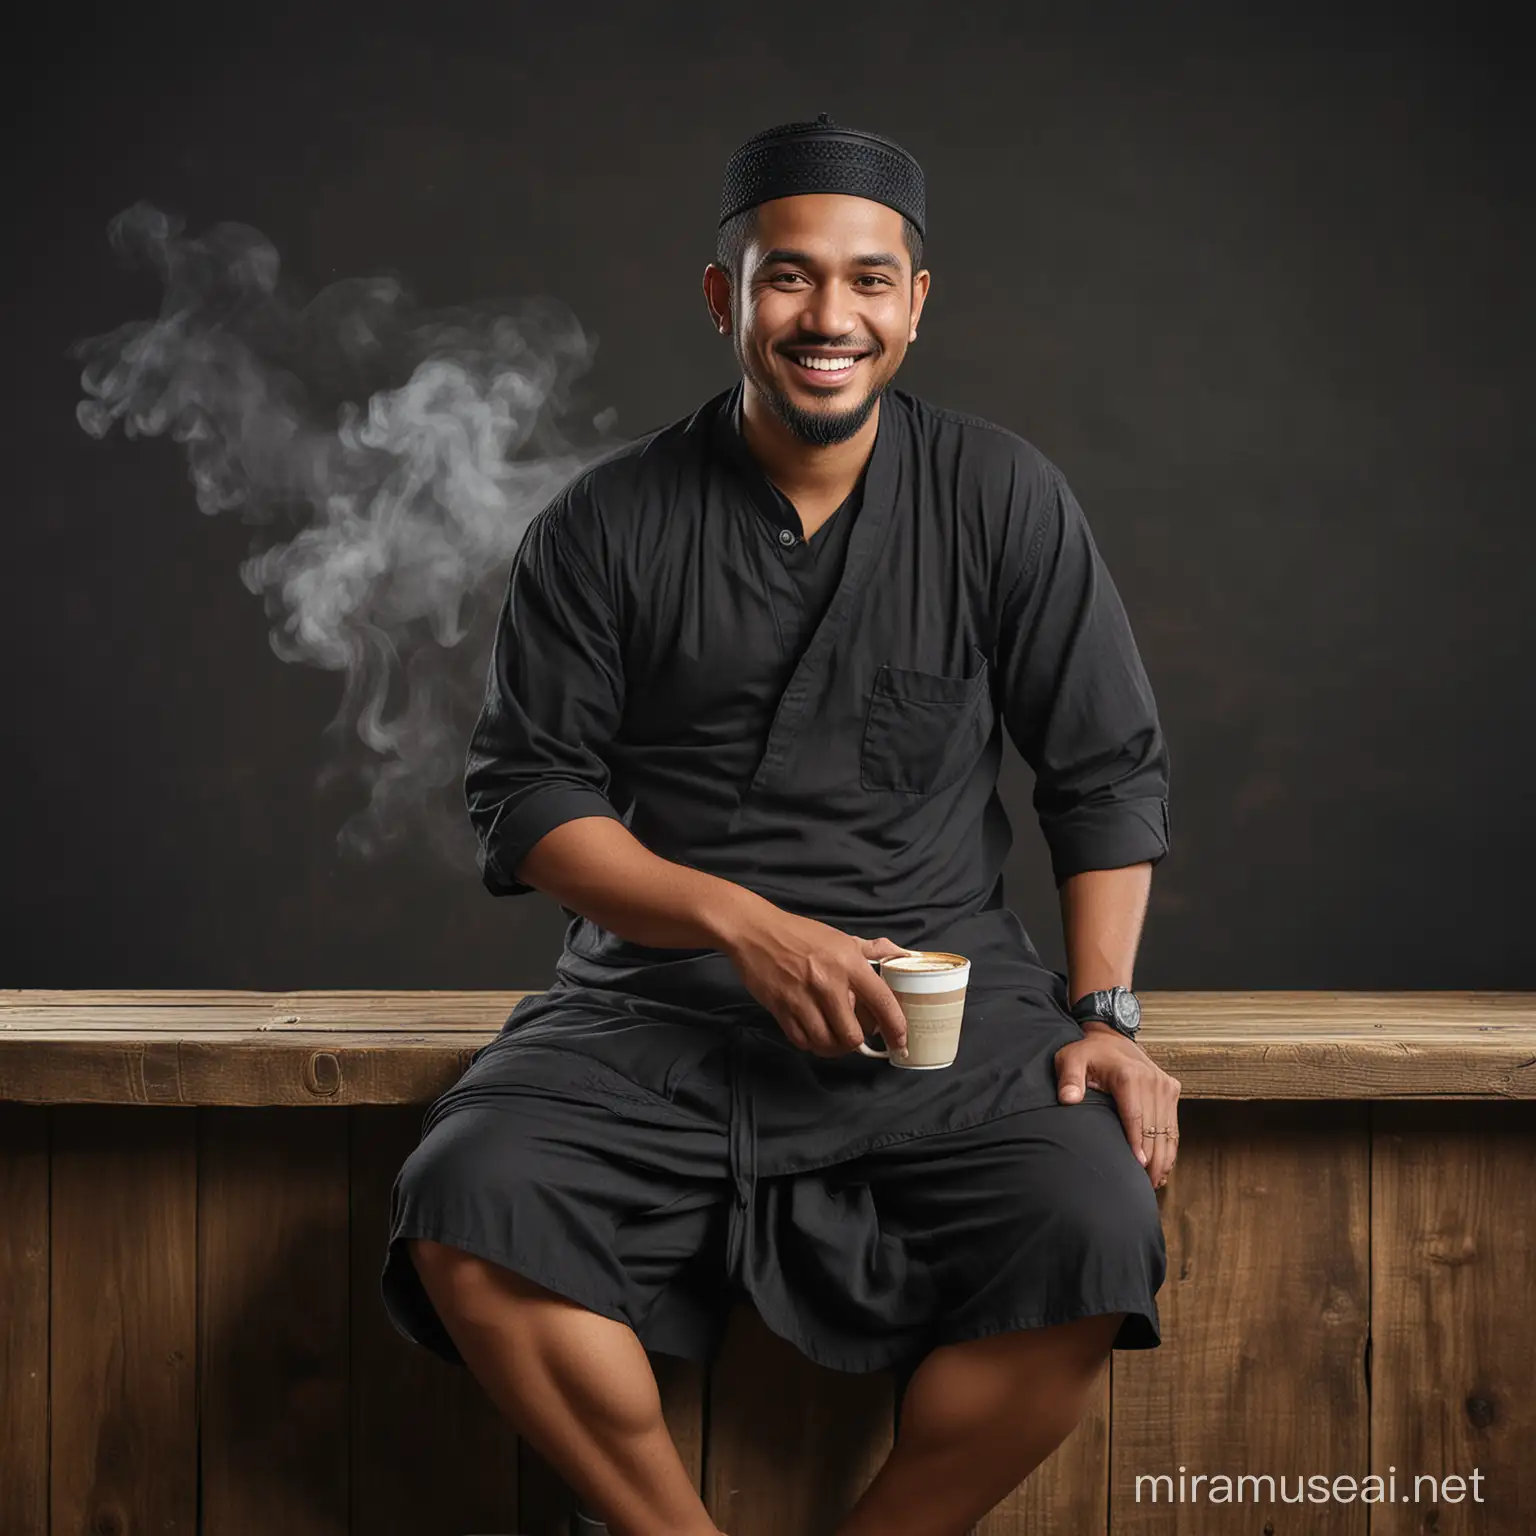 Smiling Muslim Man Enjoying Coffee in Rustic Setting